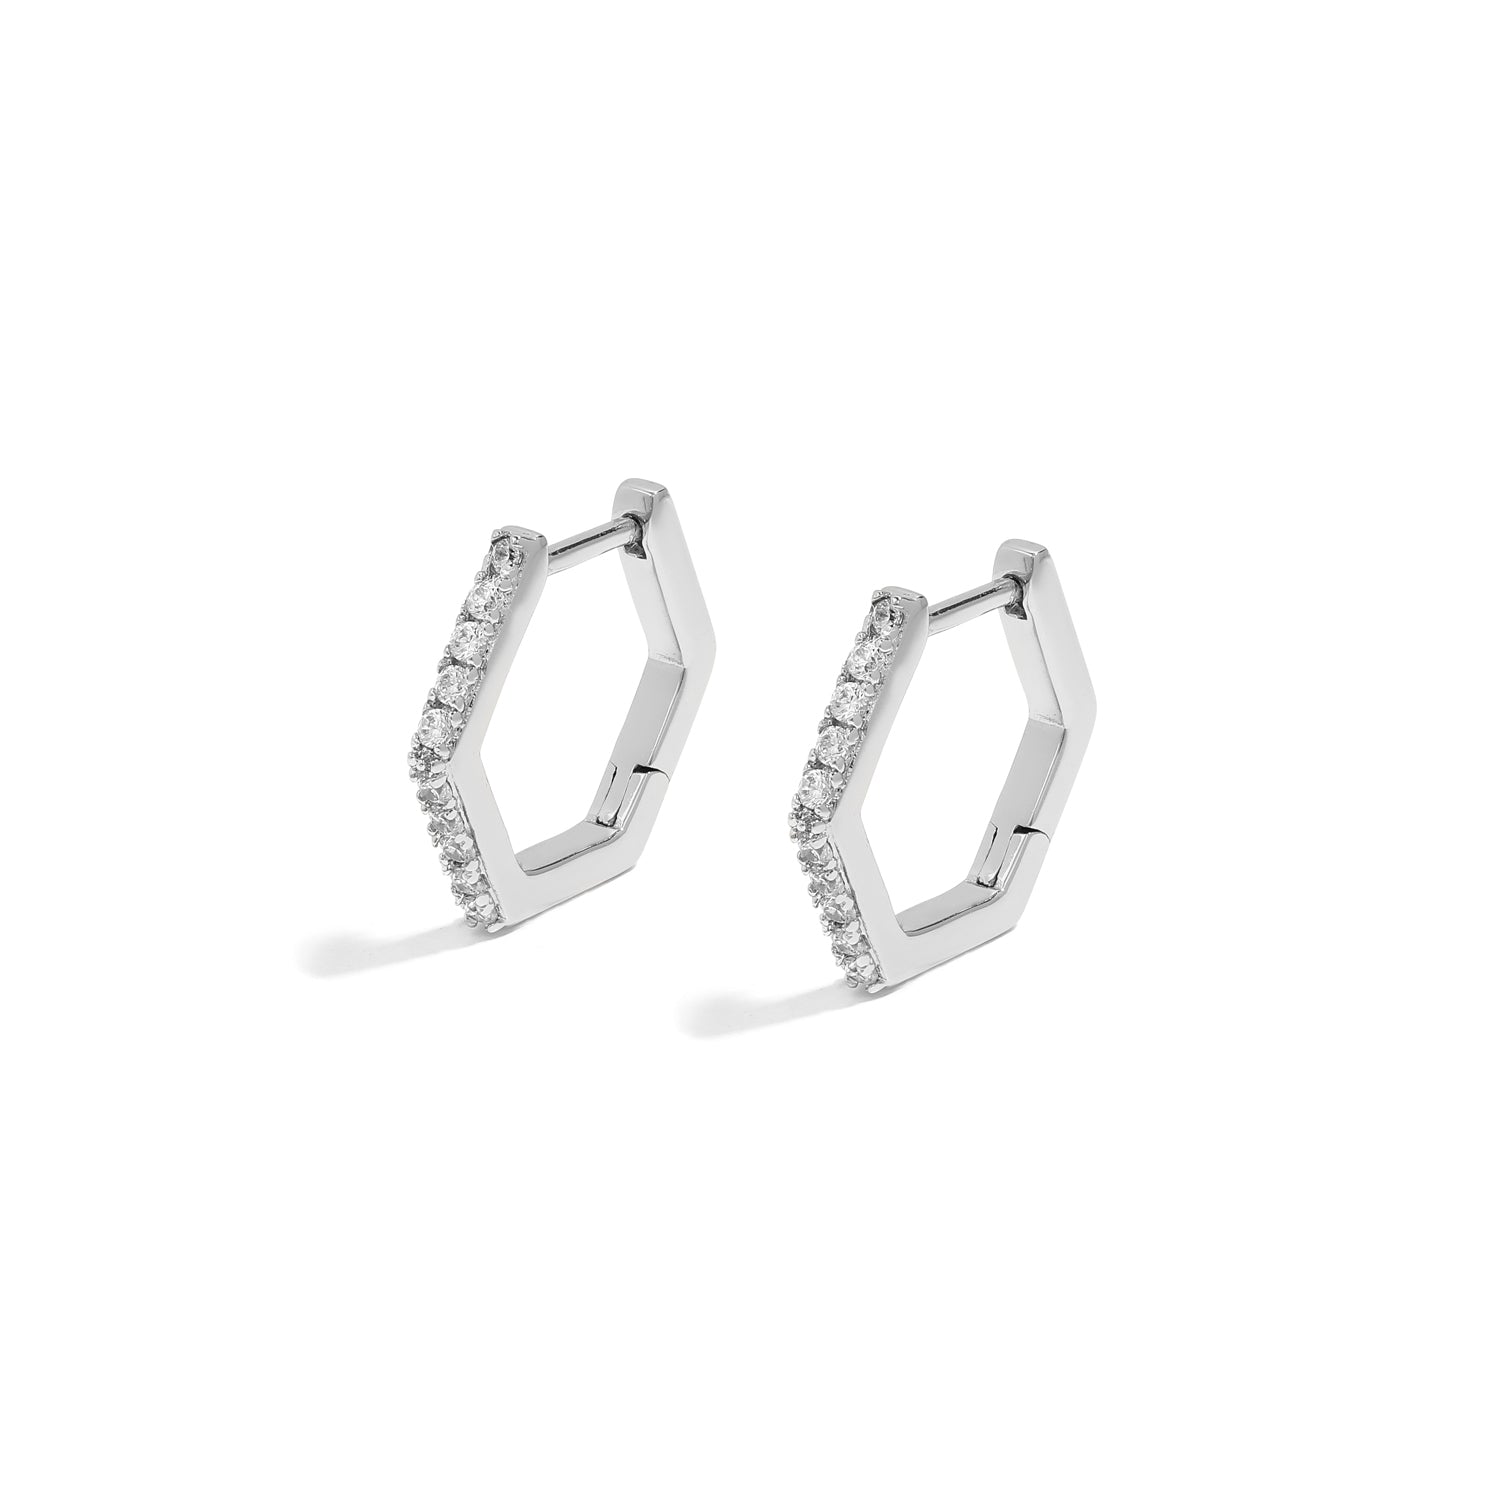 Elegant and statement earrings. Silver hexagonal huggies set with cubic zirconia stones.